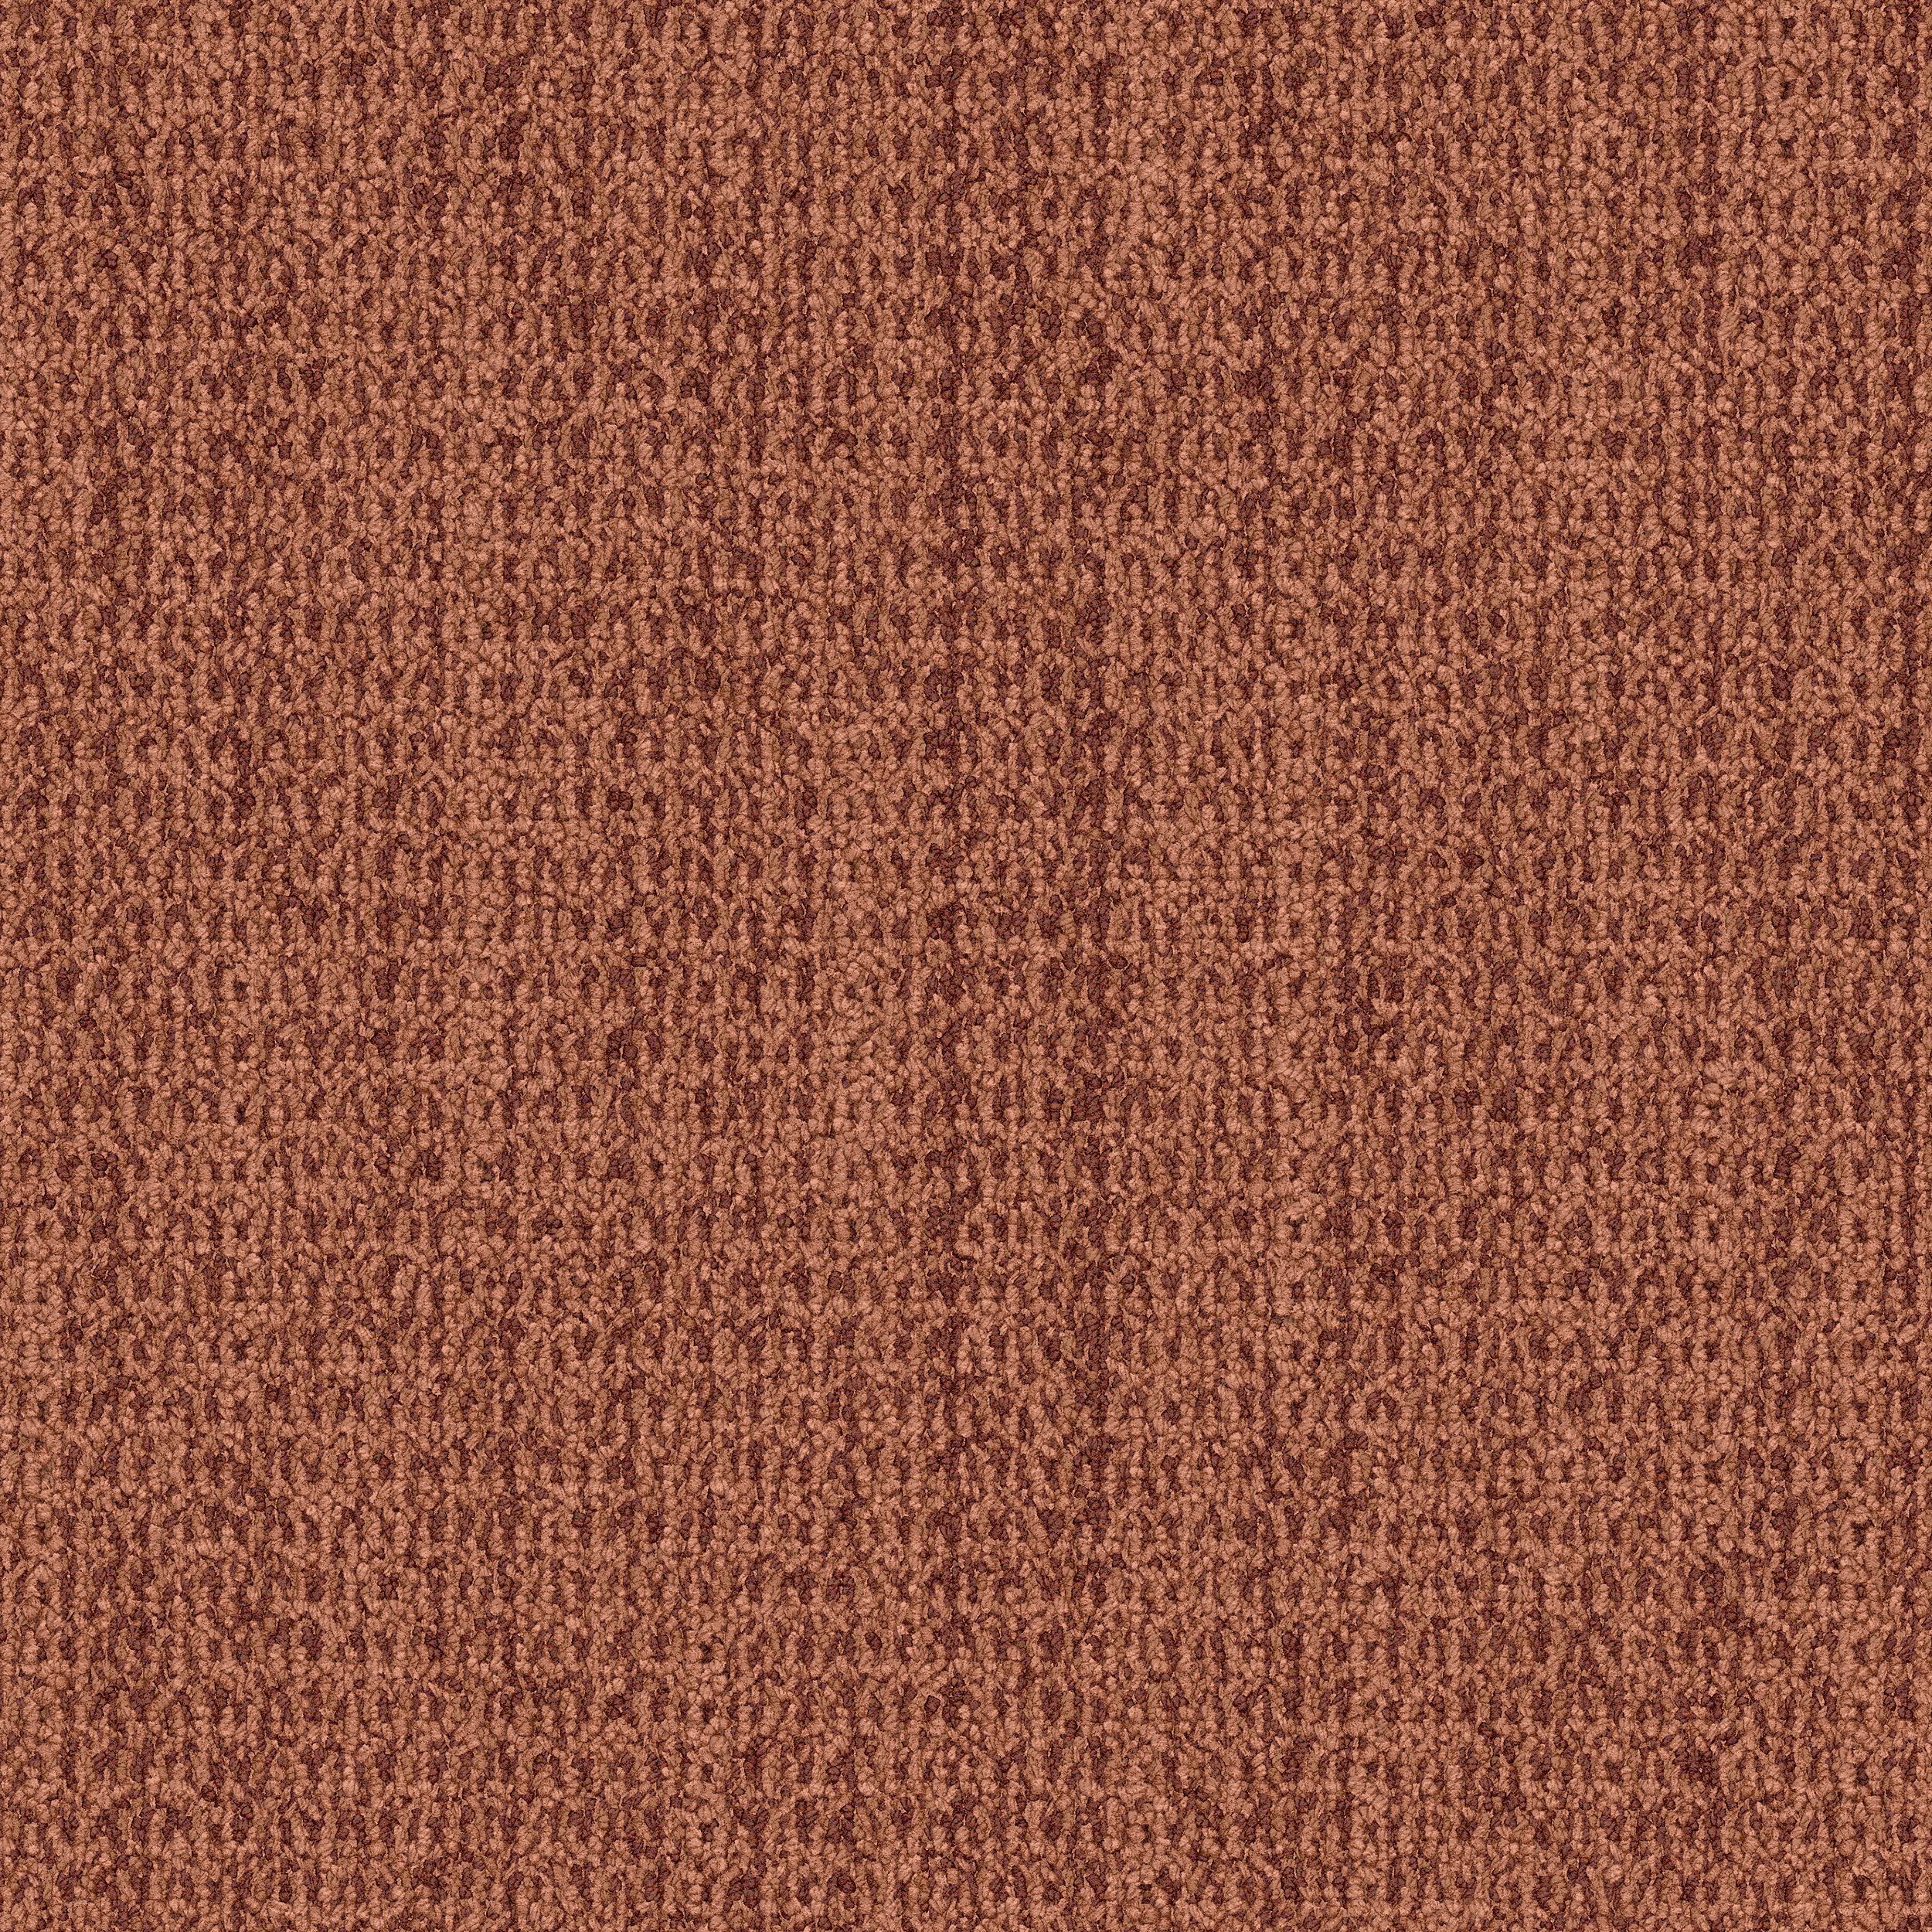 WG100 Carpet Tile In Terracotta número de imagen 1